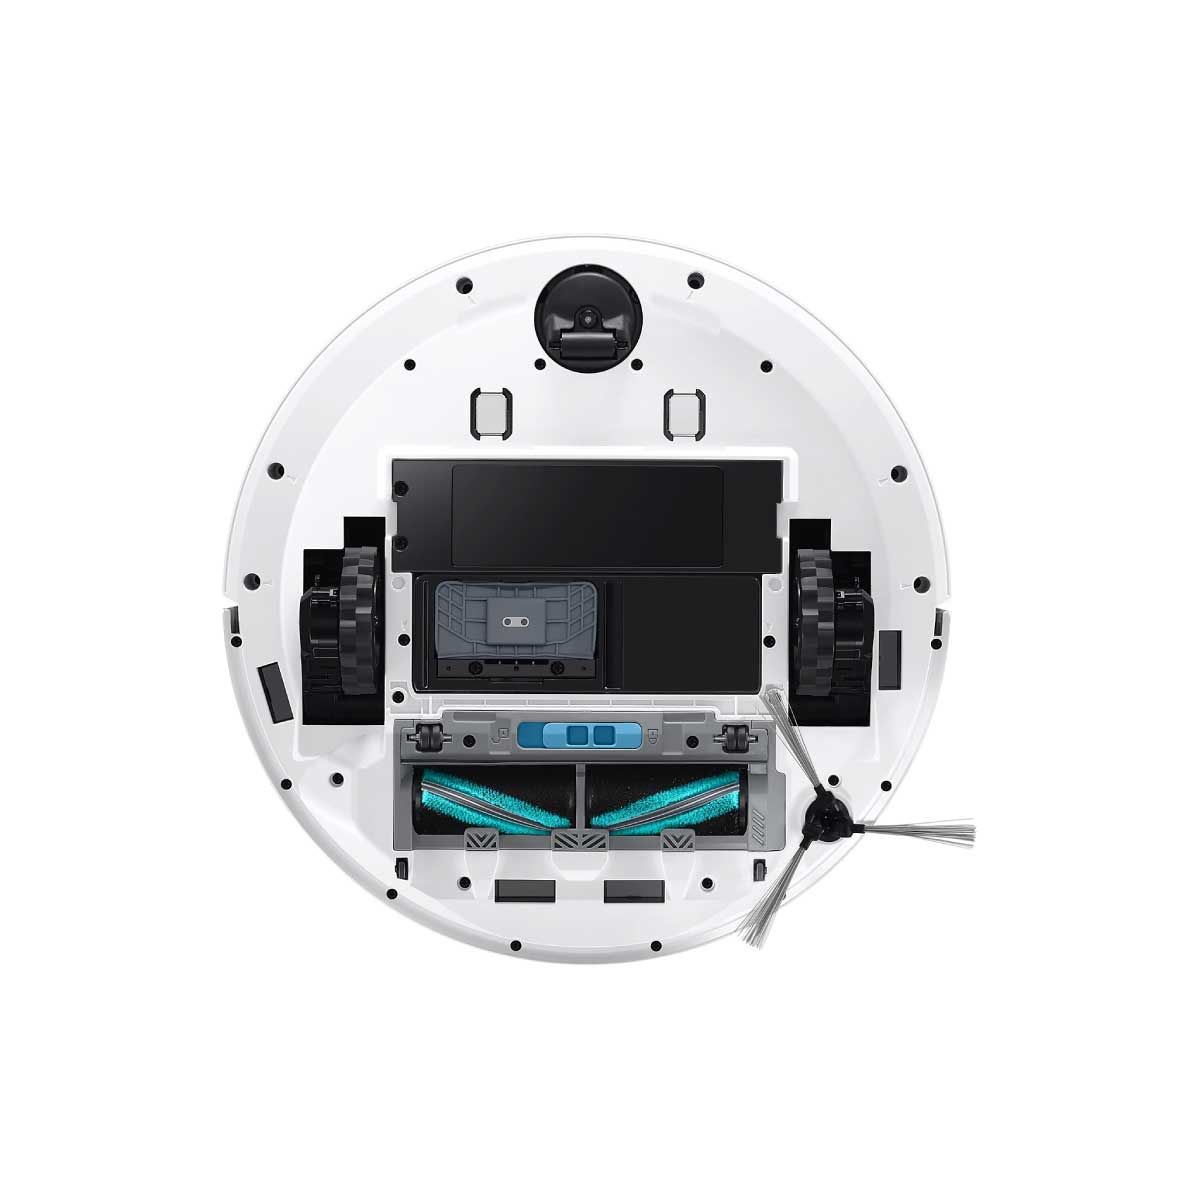 Samsung เครื่องดูดฝุ่น Jet Bot+ Robot LiDAR Sensor รุ่น VR30T85513W/ST